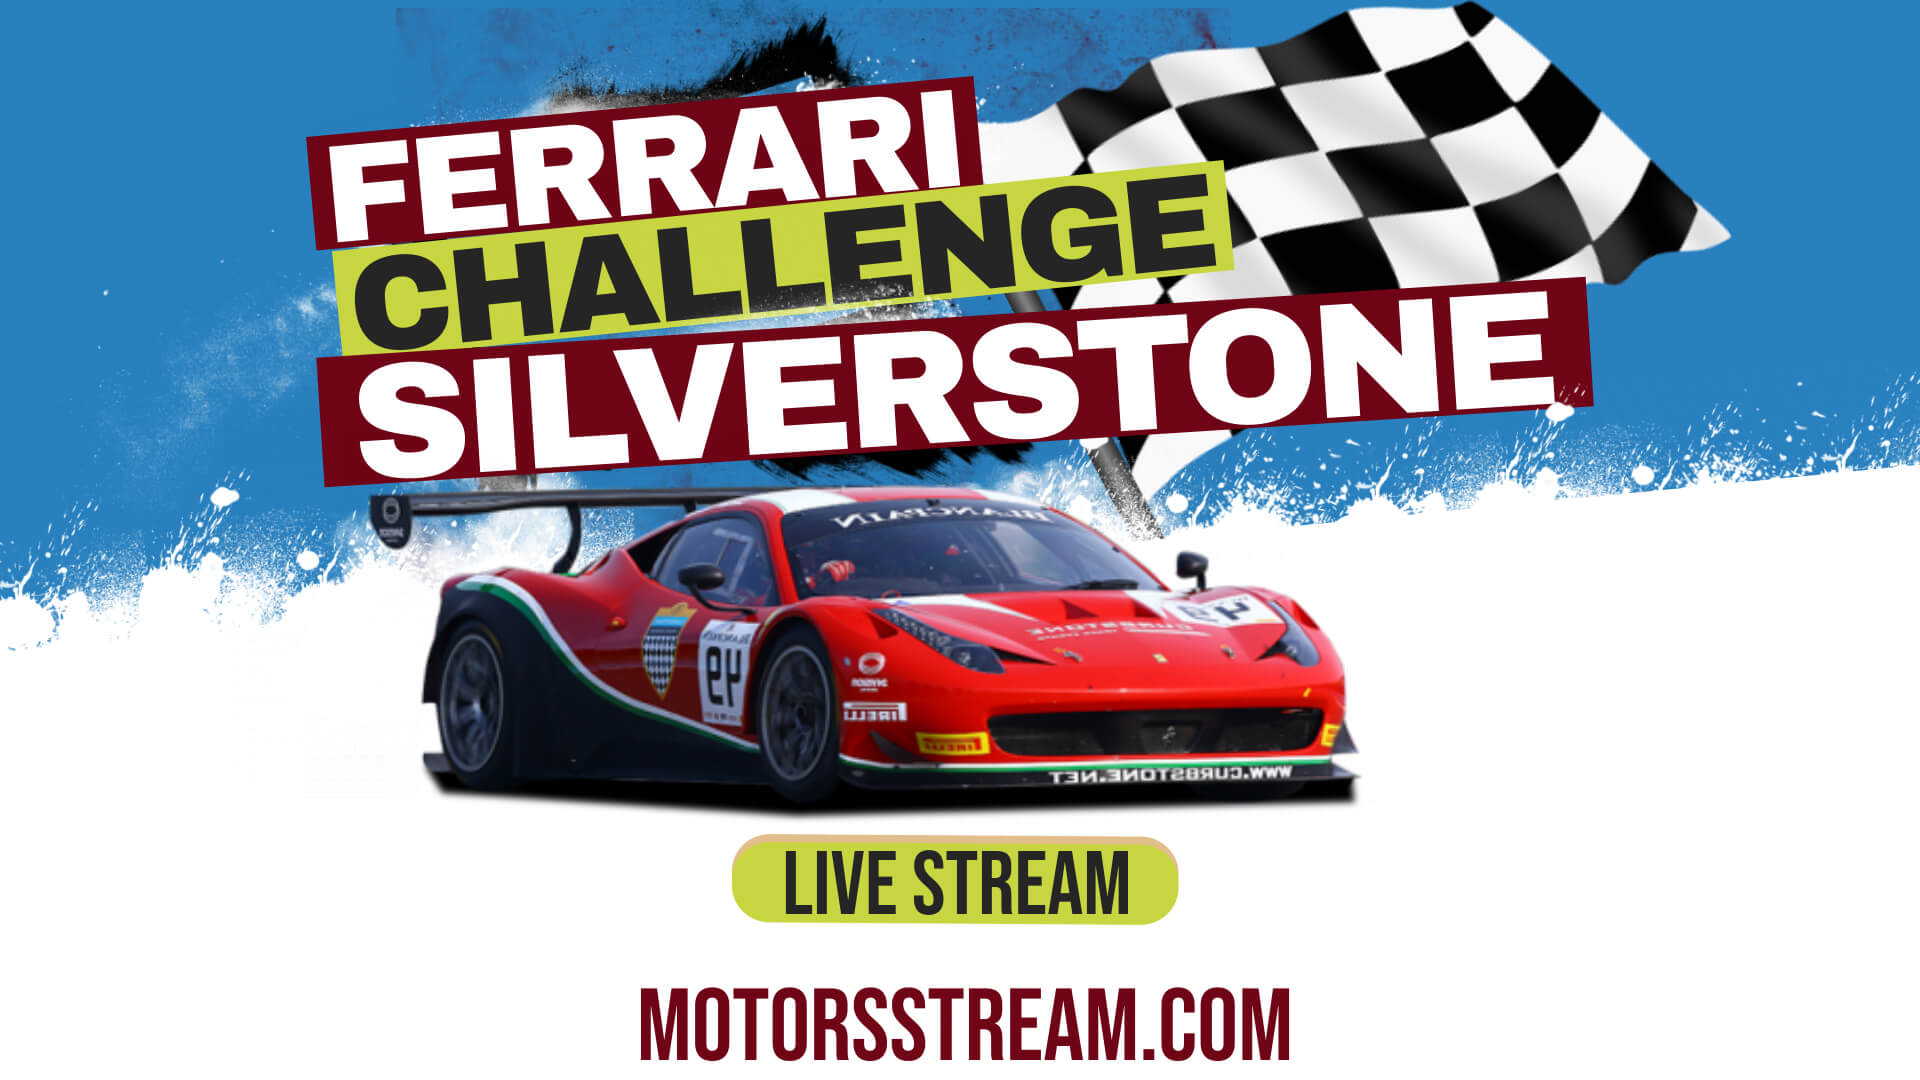 Live Silverstone Ferrari Challenge Stream